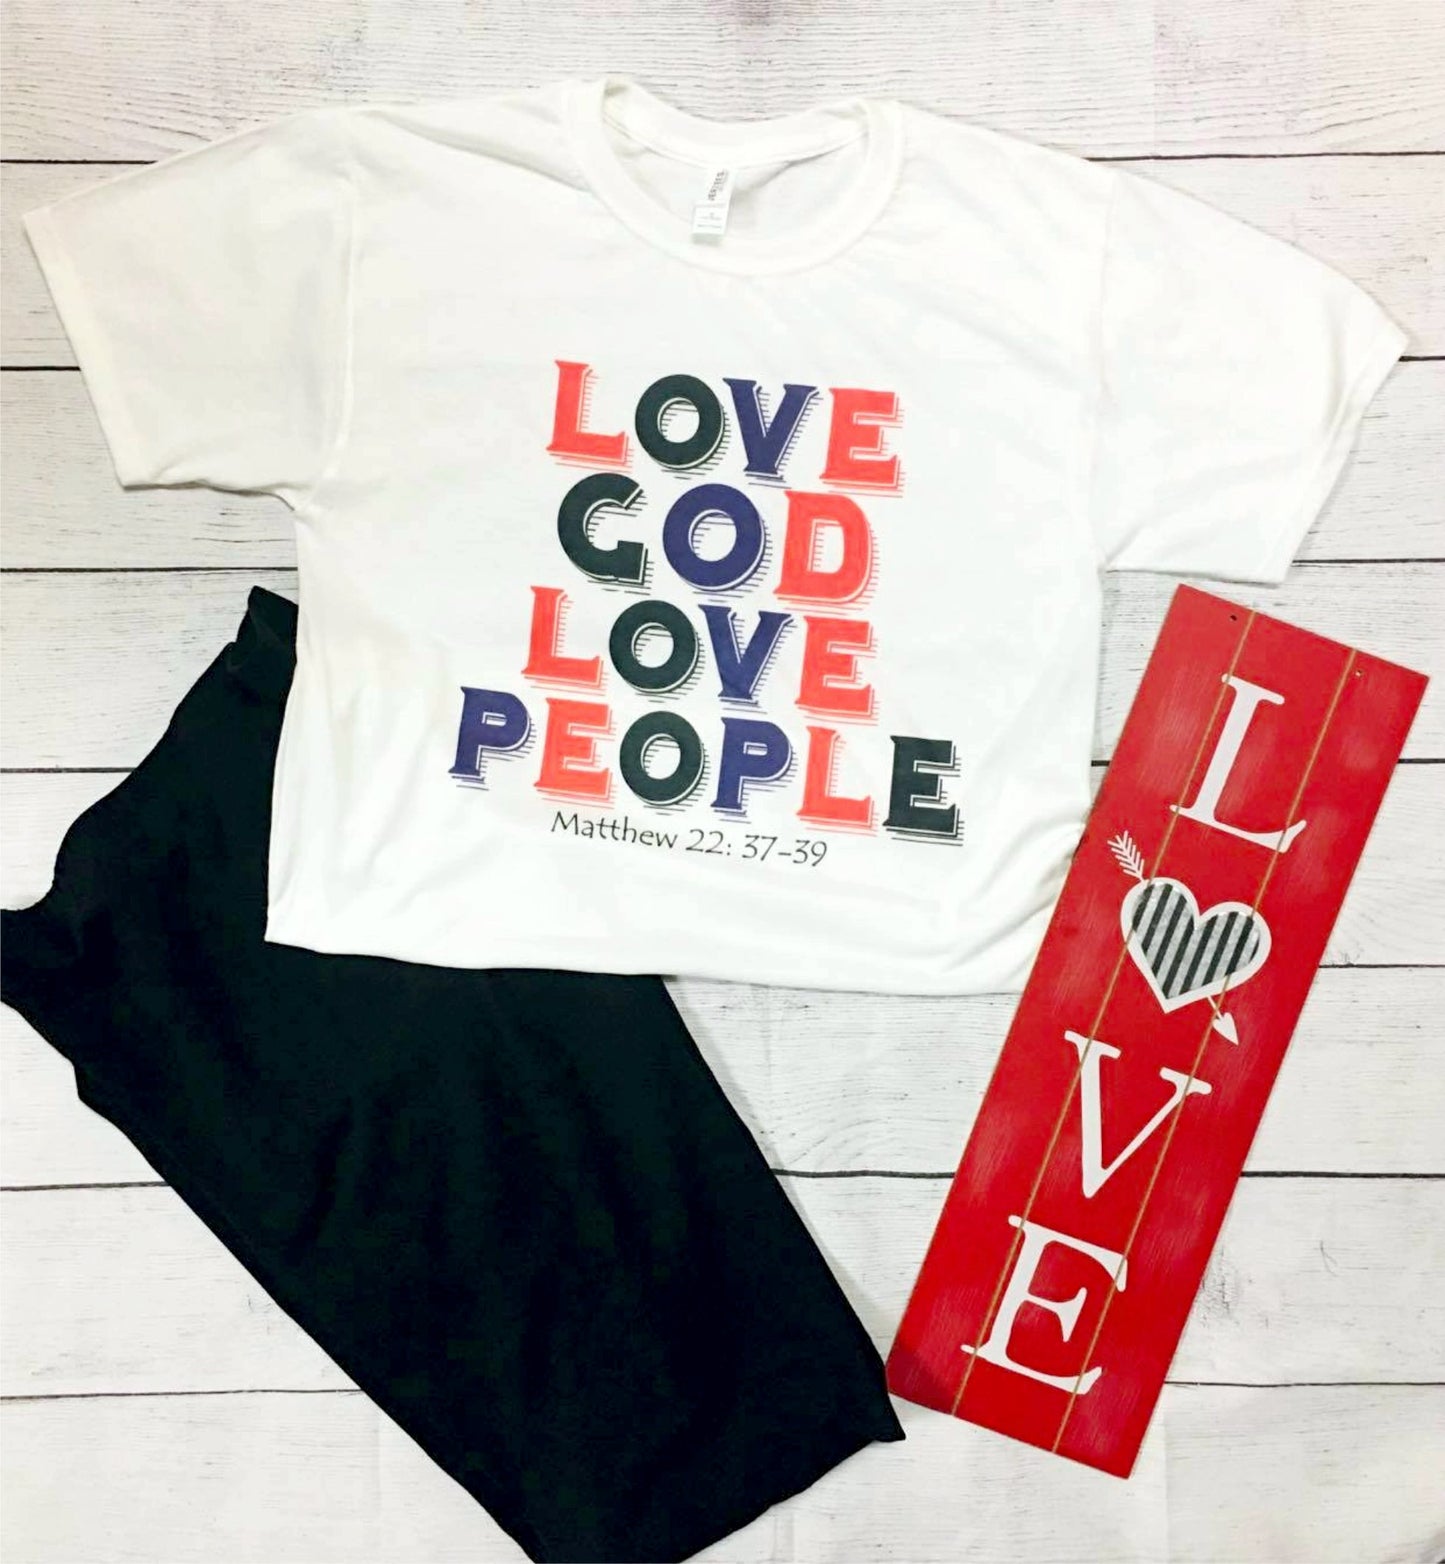 "LOVE GOD LOVE PEOPLE" t-shirt